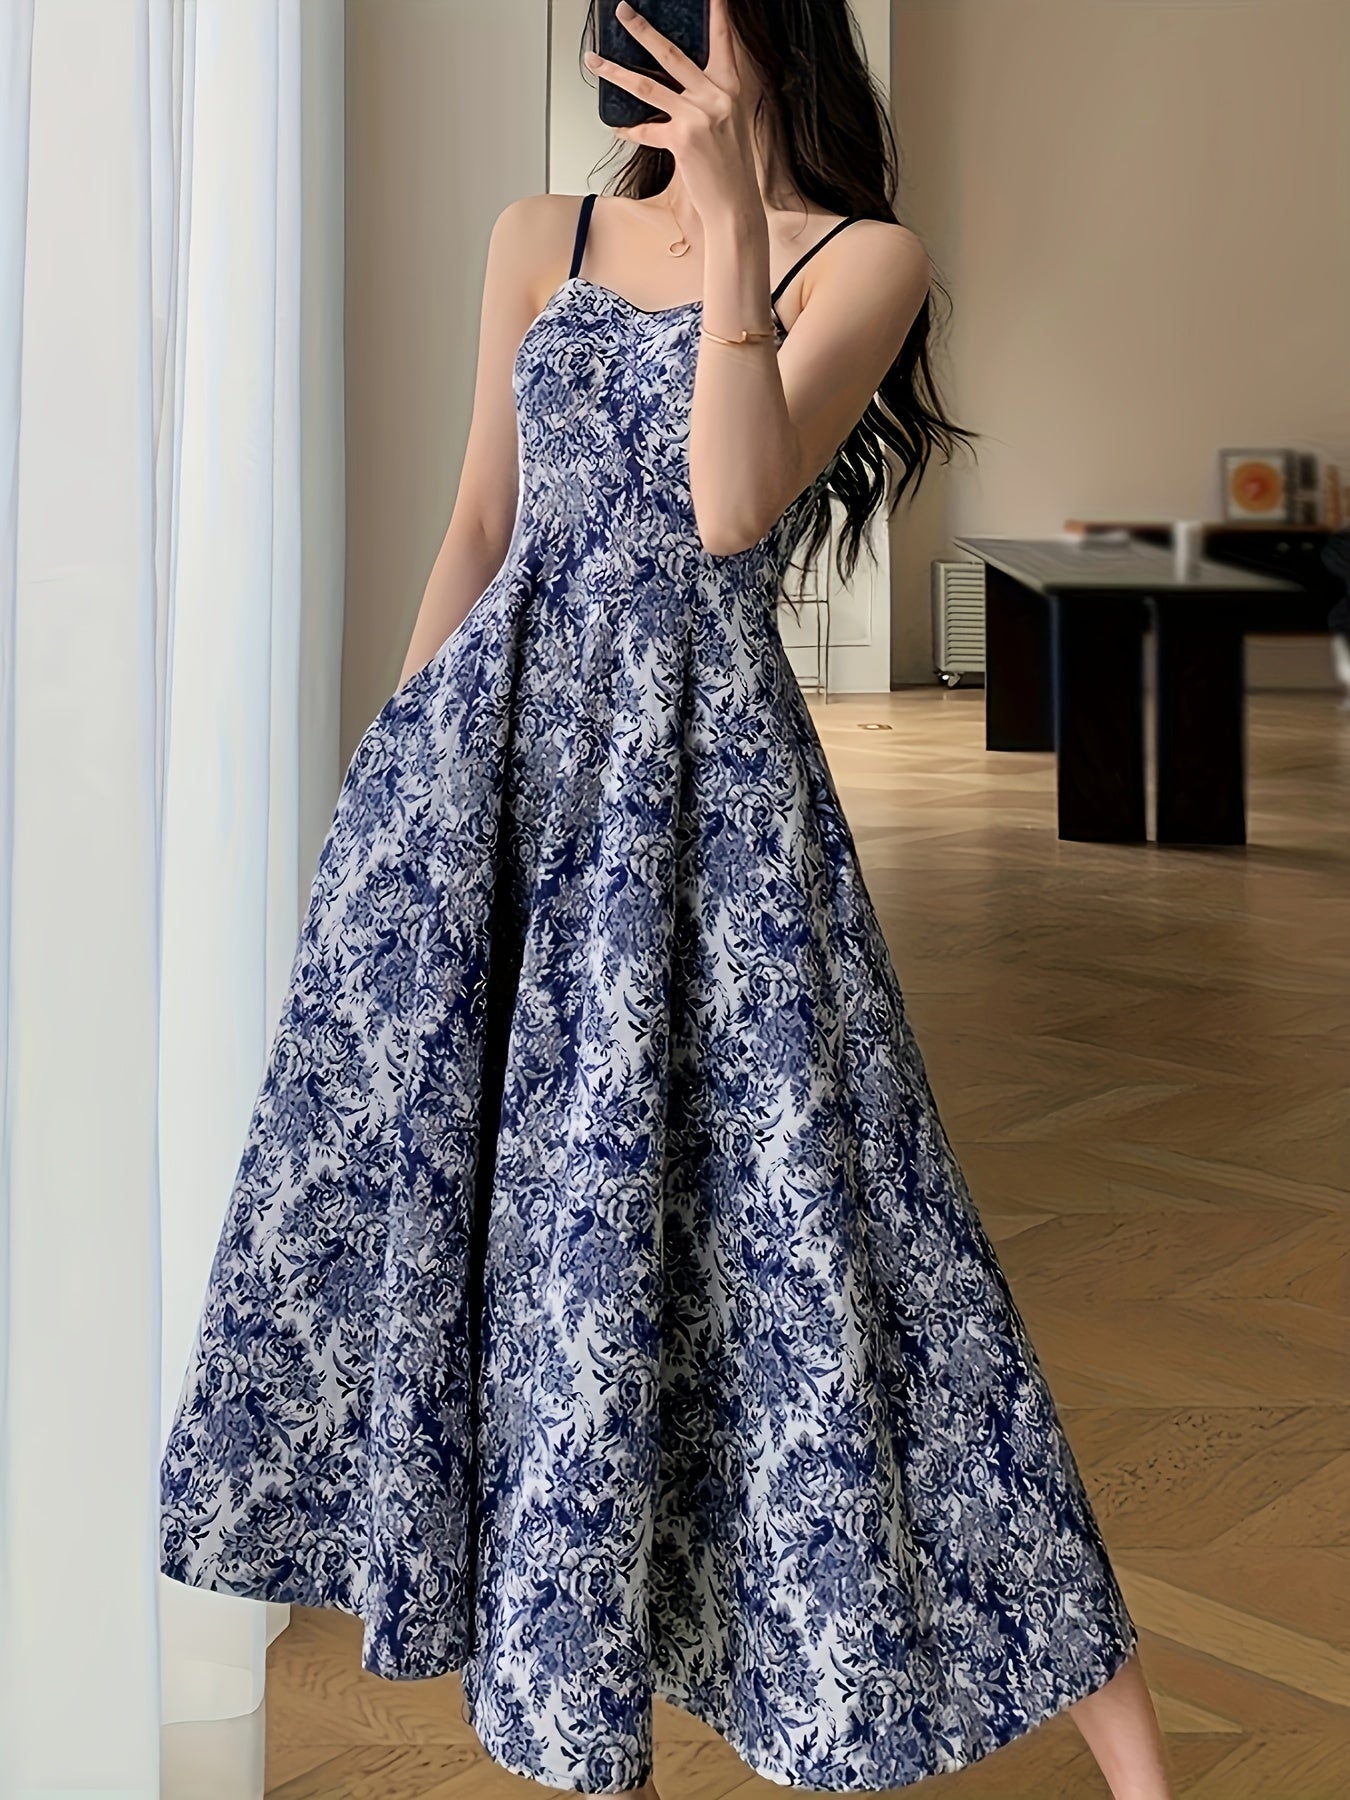 xieyinshe  Floral Print Swing Cami Dress, Elegant Sleeveless Spaghetti Strap Dress, Women's Clothing